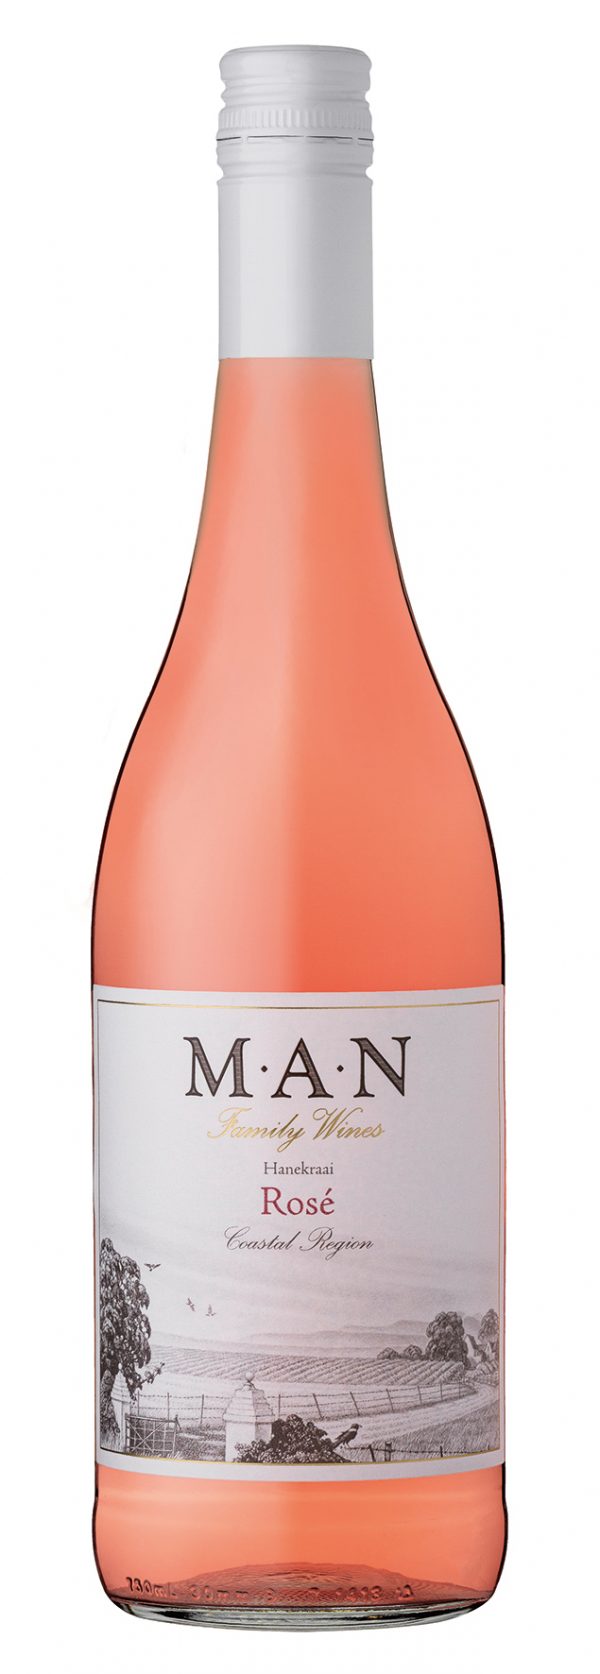 hanekraai_rosé_man_family_wines